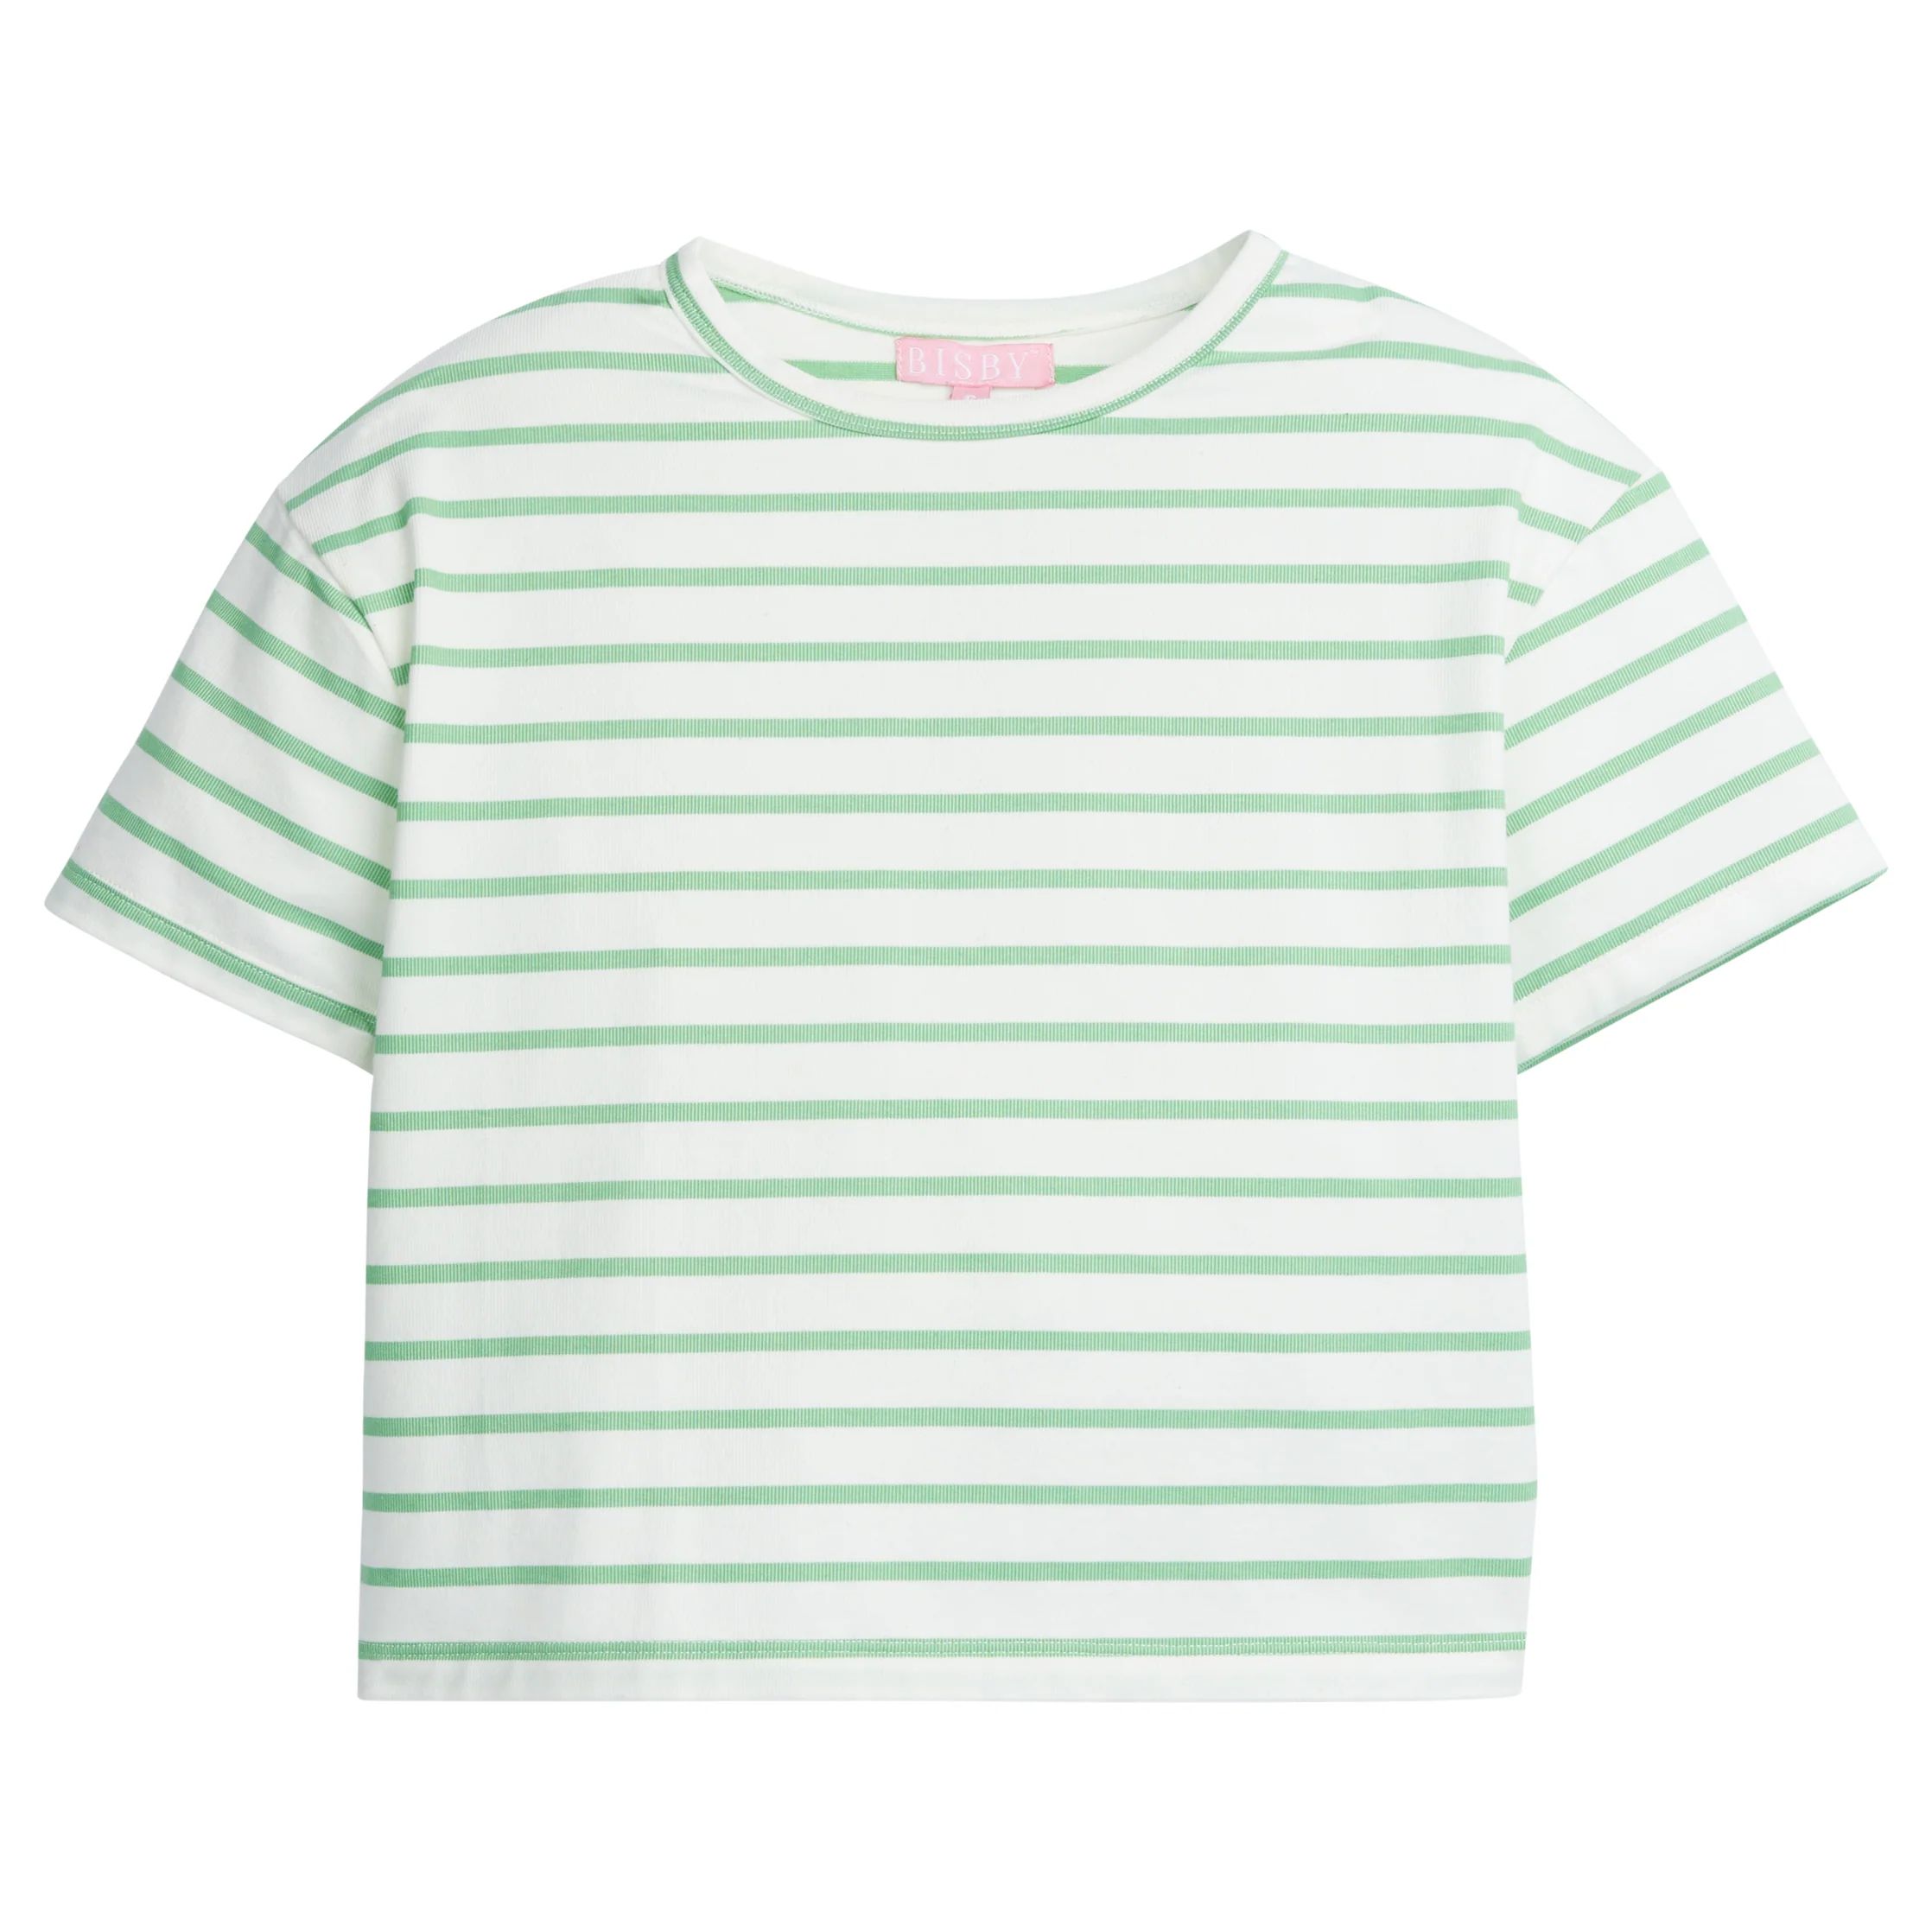 Boxy Tee - Green Stripe | BISBY Kids